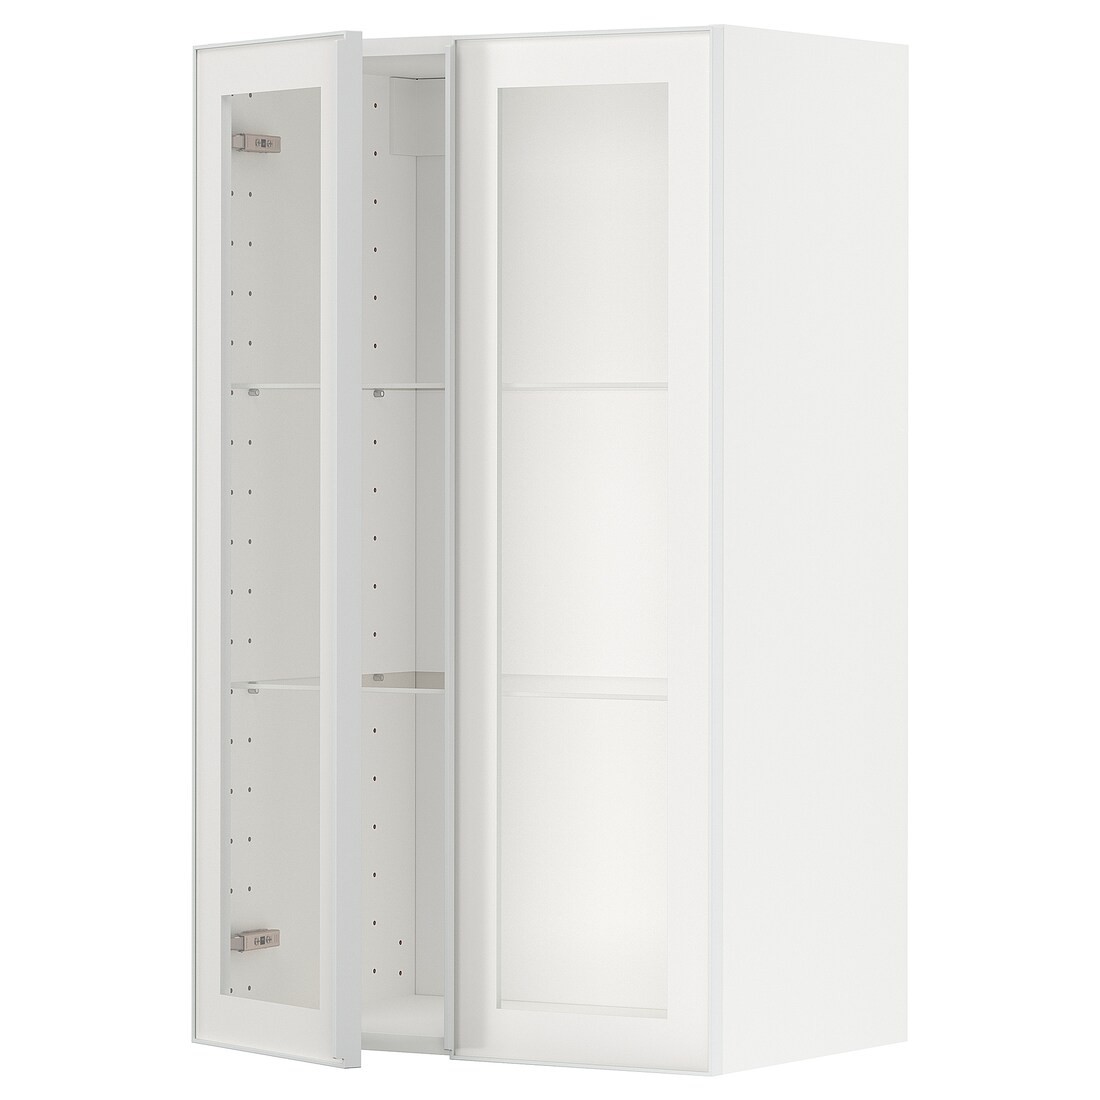 IKEA METOD МЕТОД Навесной шкаф, белый / Hesta белое прозрачное стекло, 60x100 см 29490569 | 294.905.69